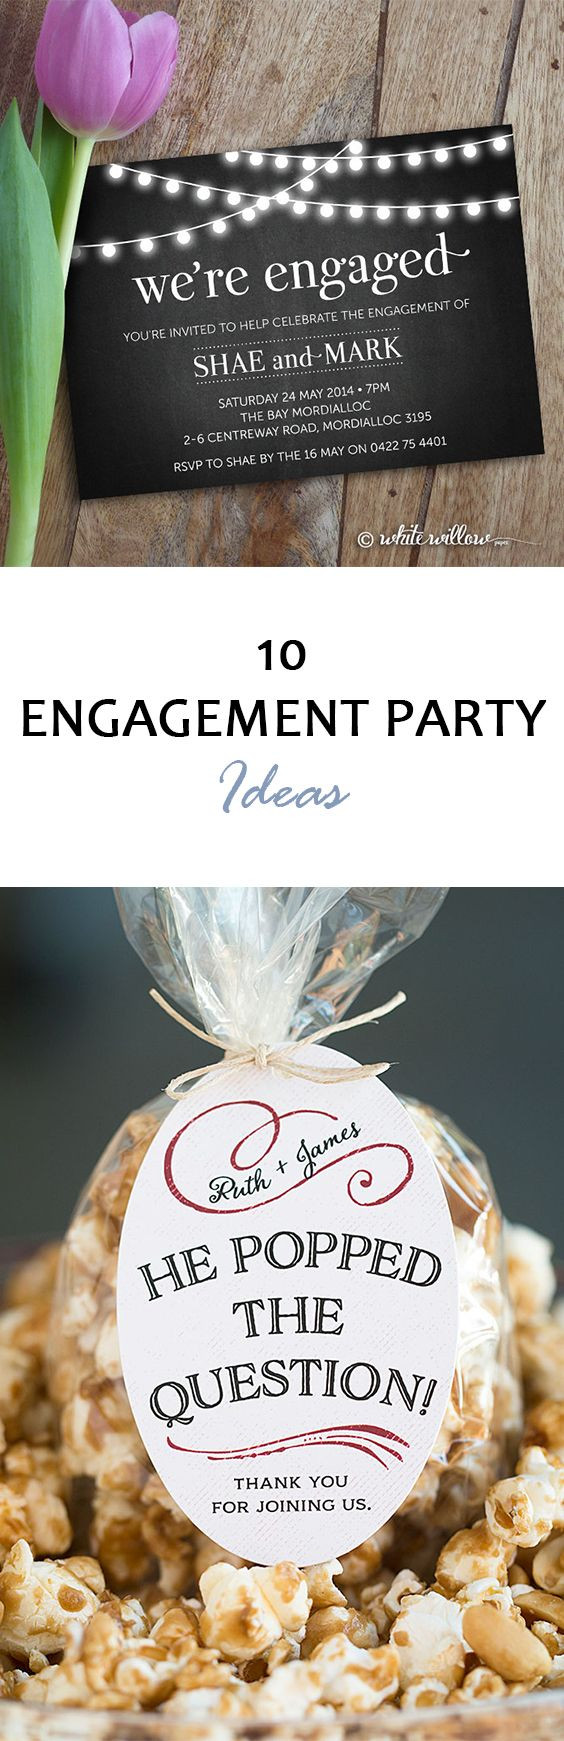 Last Minute Wedding Gift Ideas
 Best 25 Last minute wedding ts ideas on Pinterest